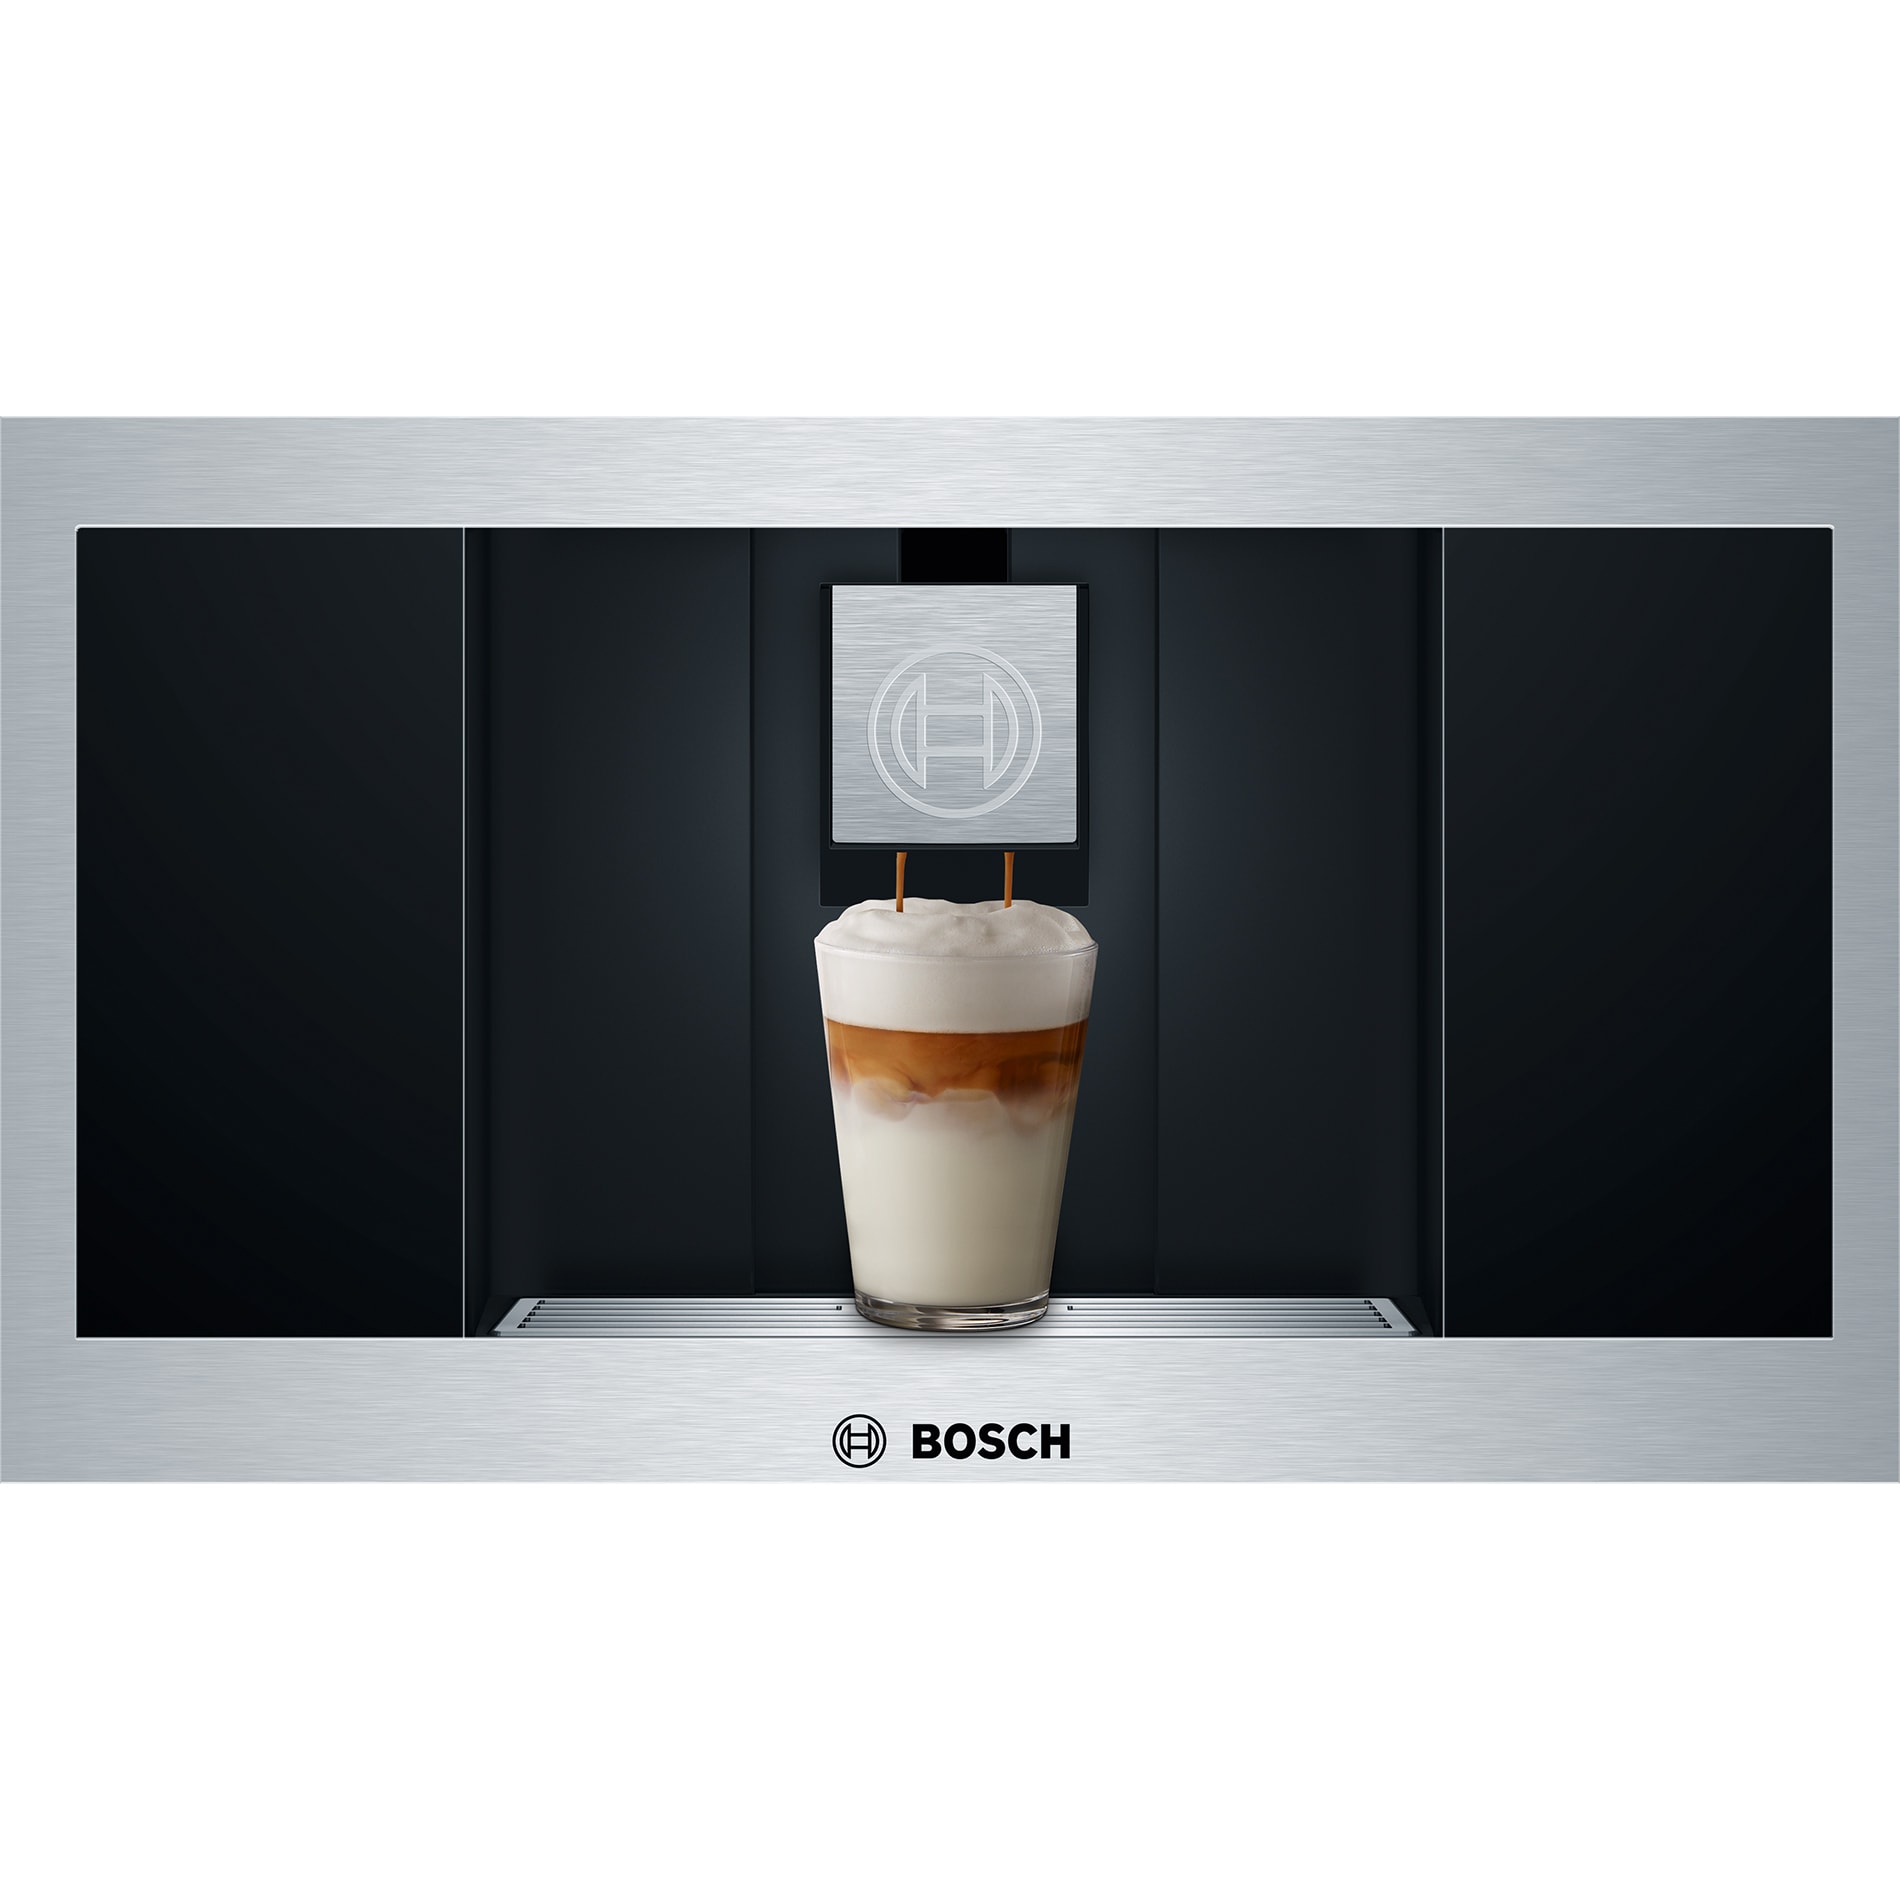 Bosch Stainless Steel Built-In Coffee Machine - Bcm8450uc